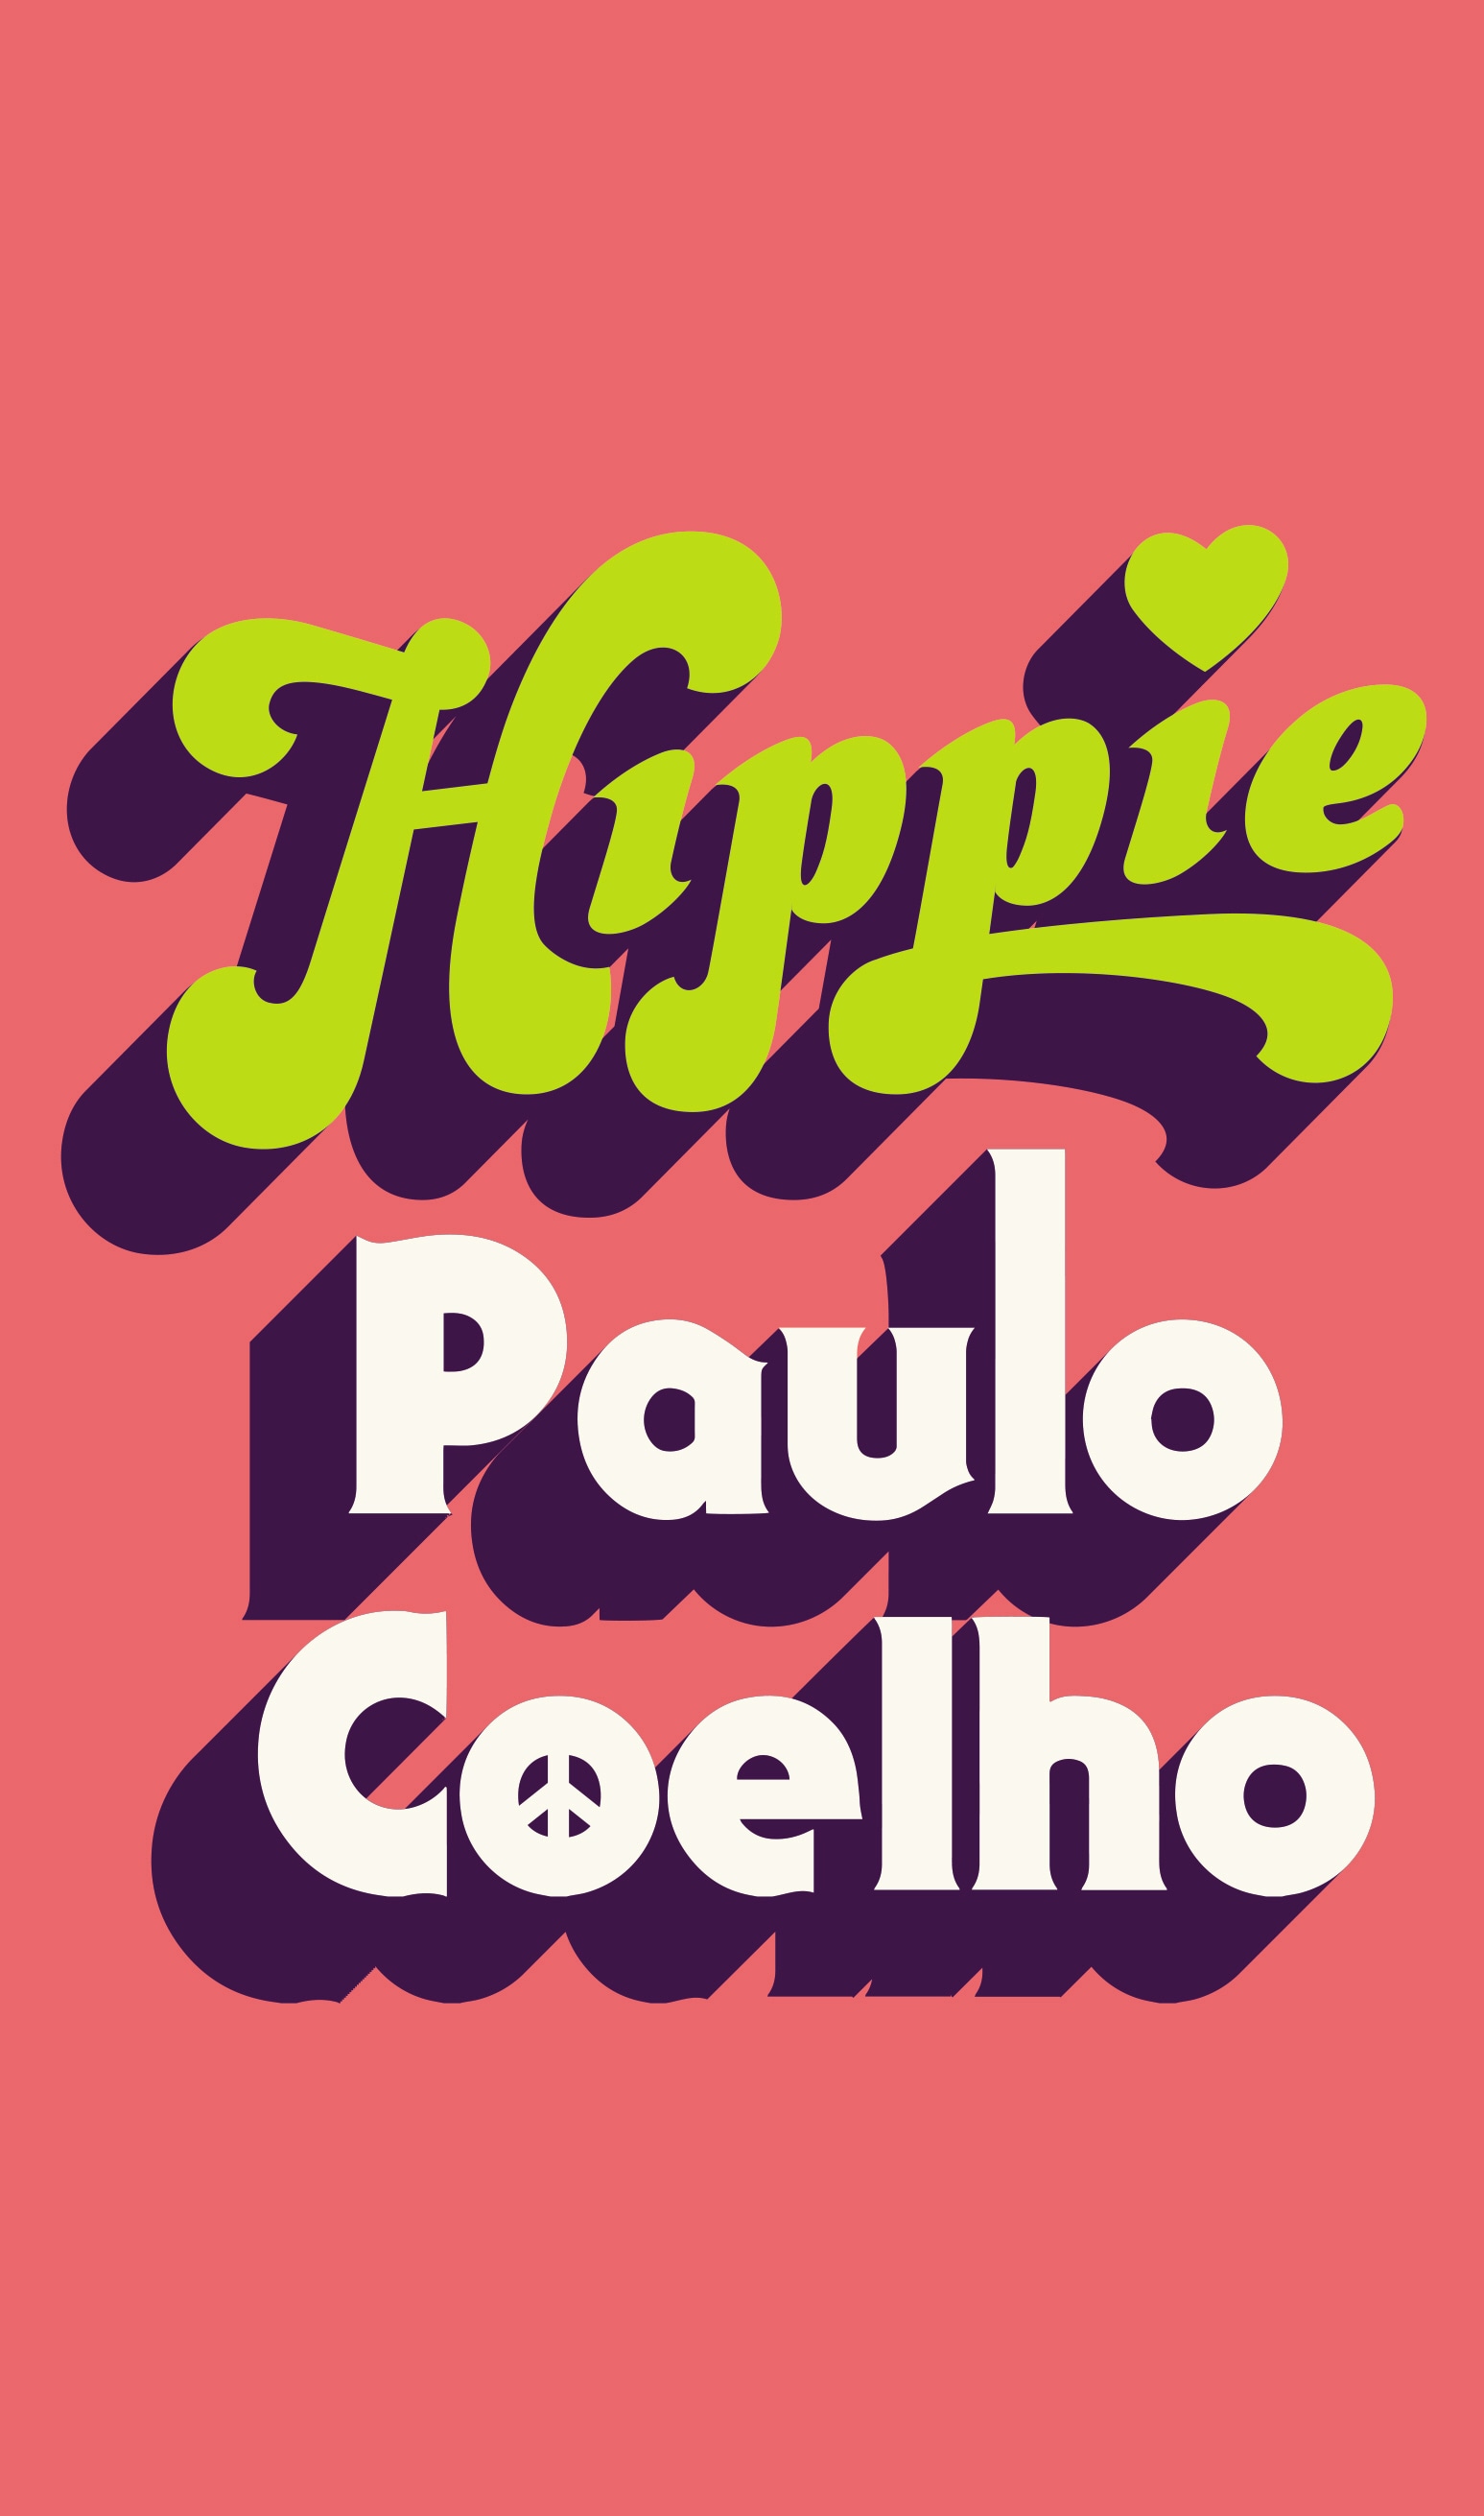 Book “Hippie” by Paulo Coelho — May 16, 2019